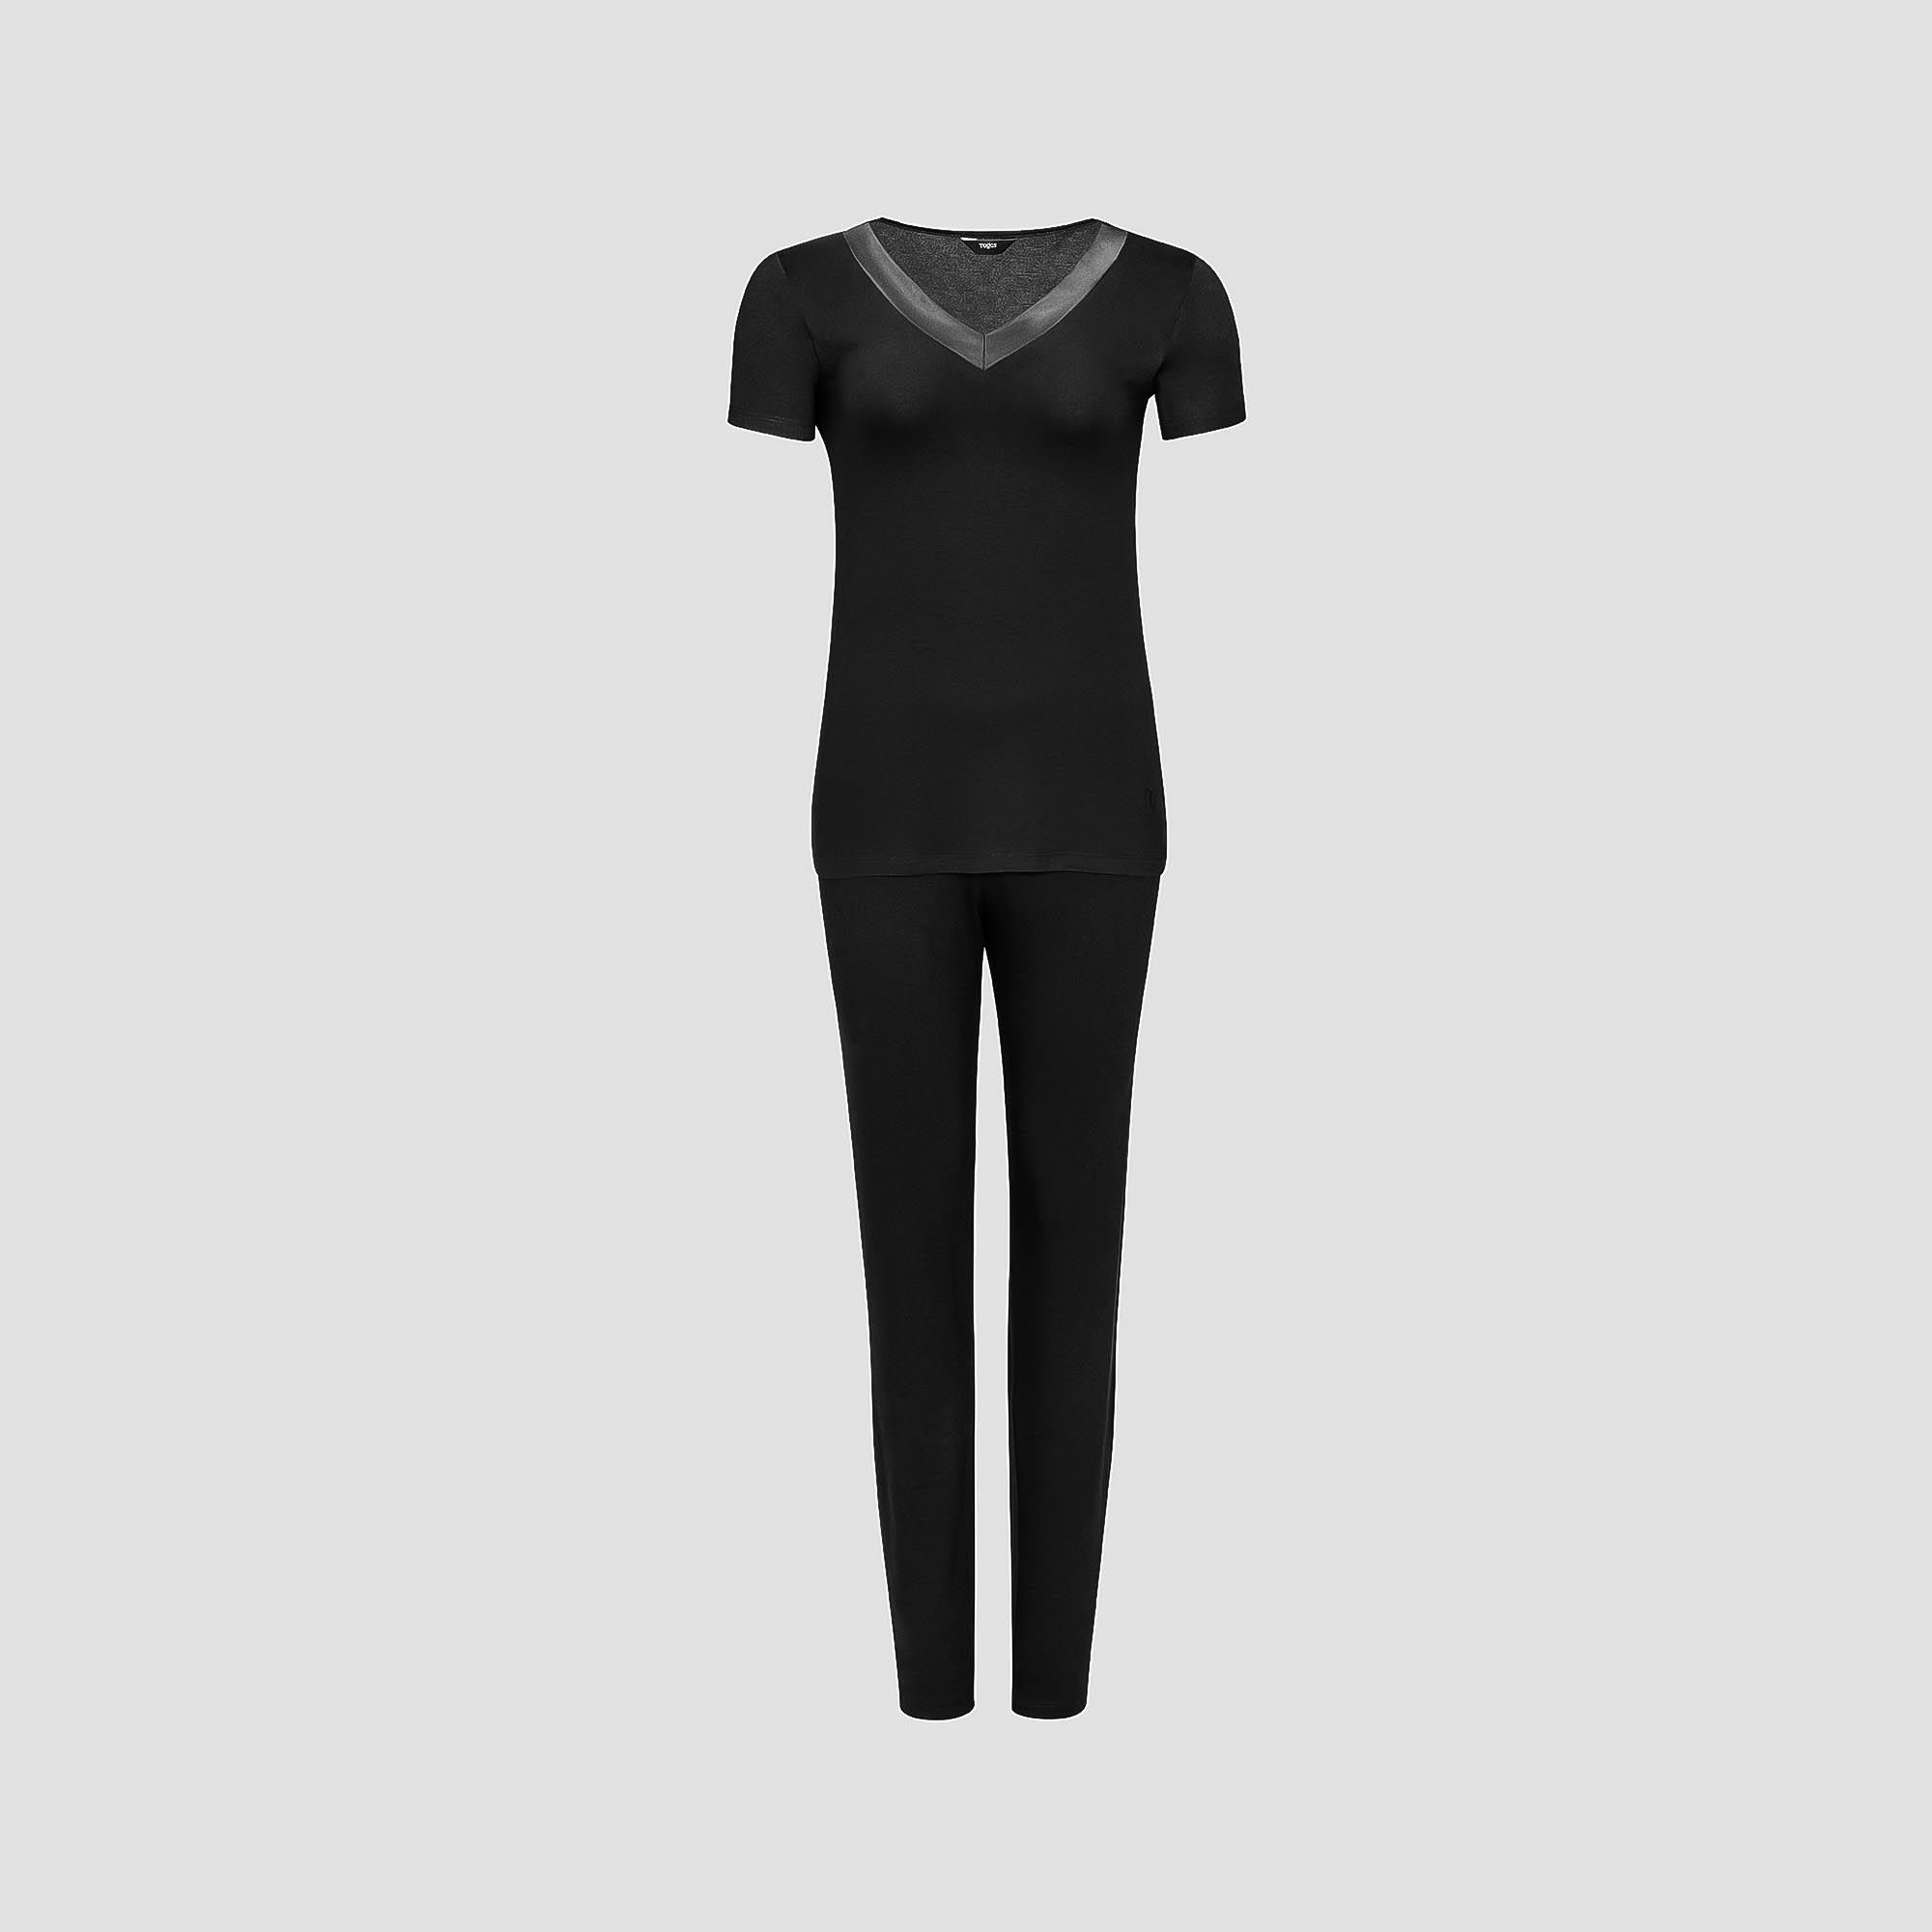 Пижама Togas Ингелла черная женская S(44) 2 предмета пижама футболка брюки